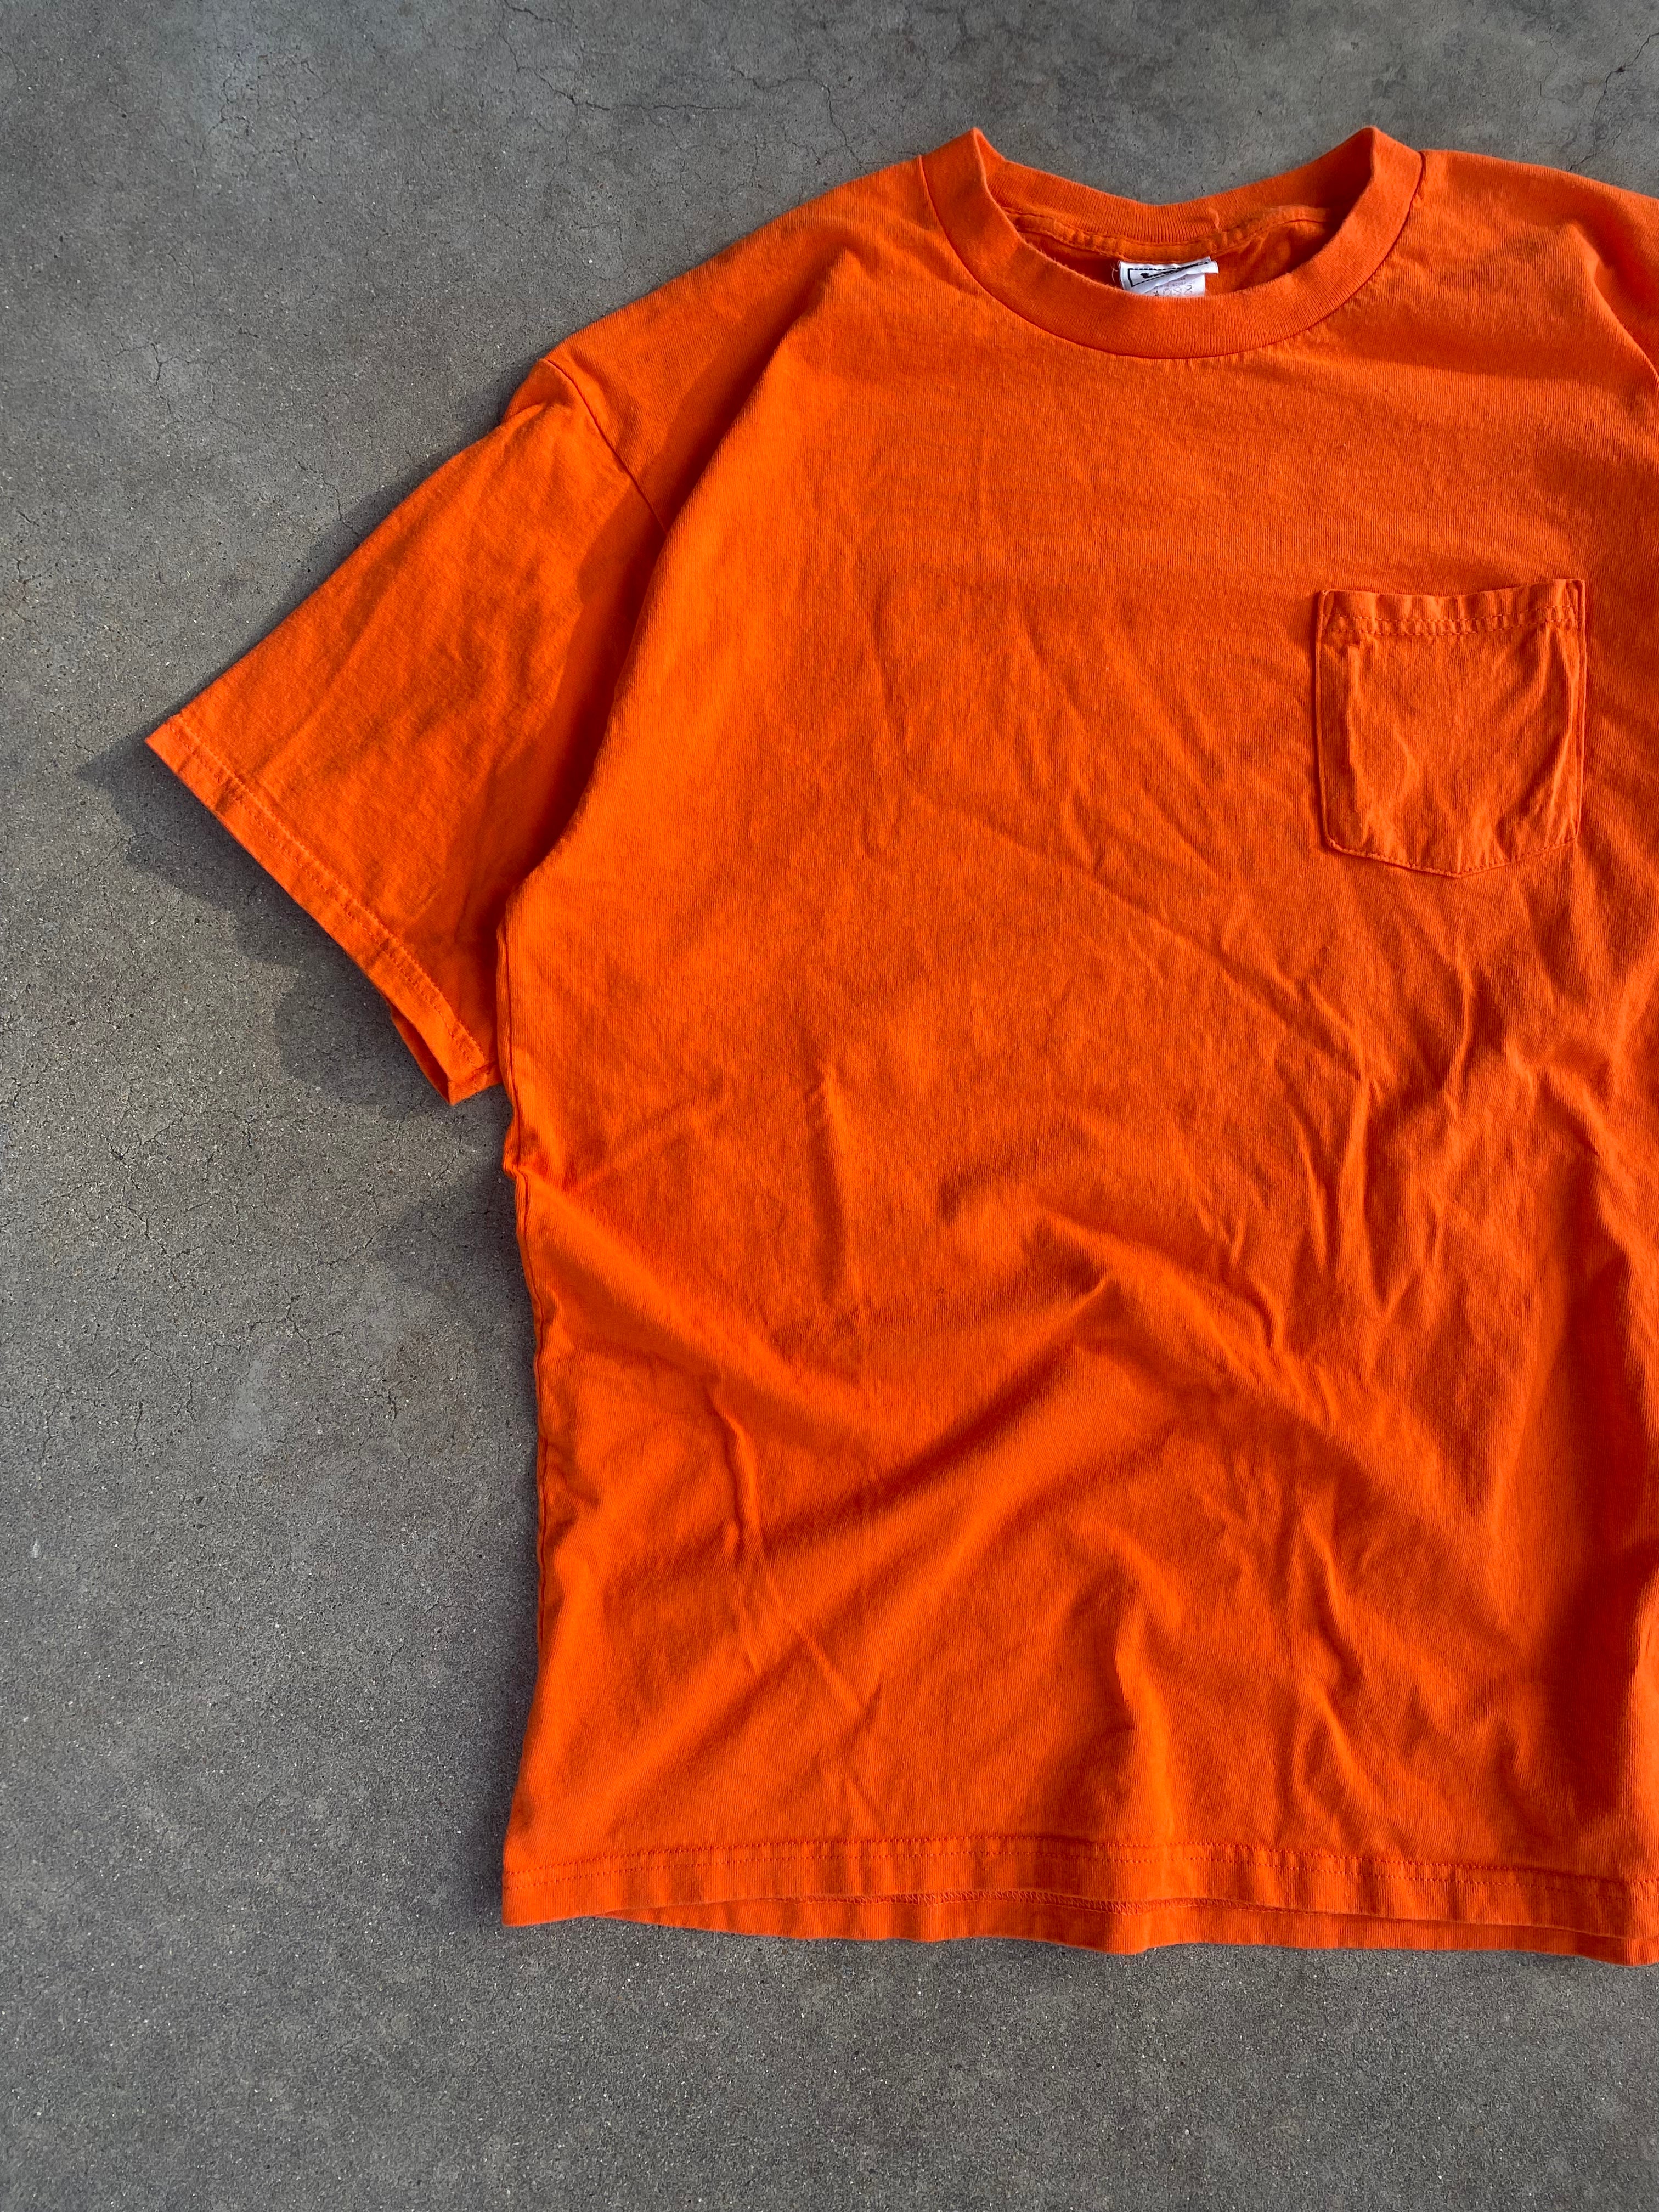 1990s Lee Sport Orange Pocket T-Shirt (L/XL)